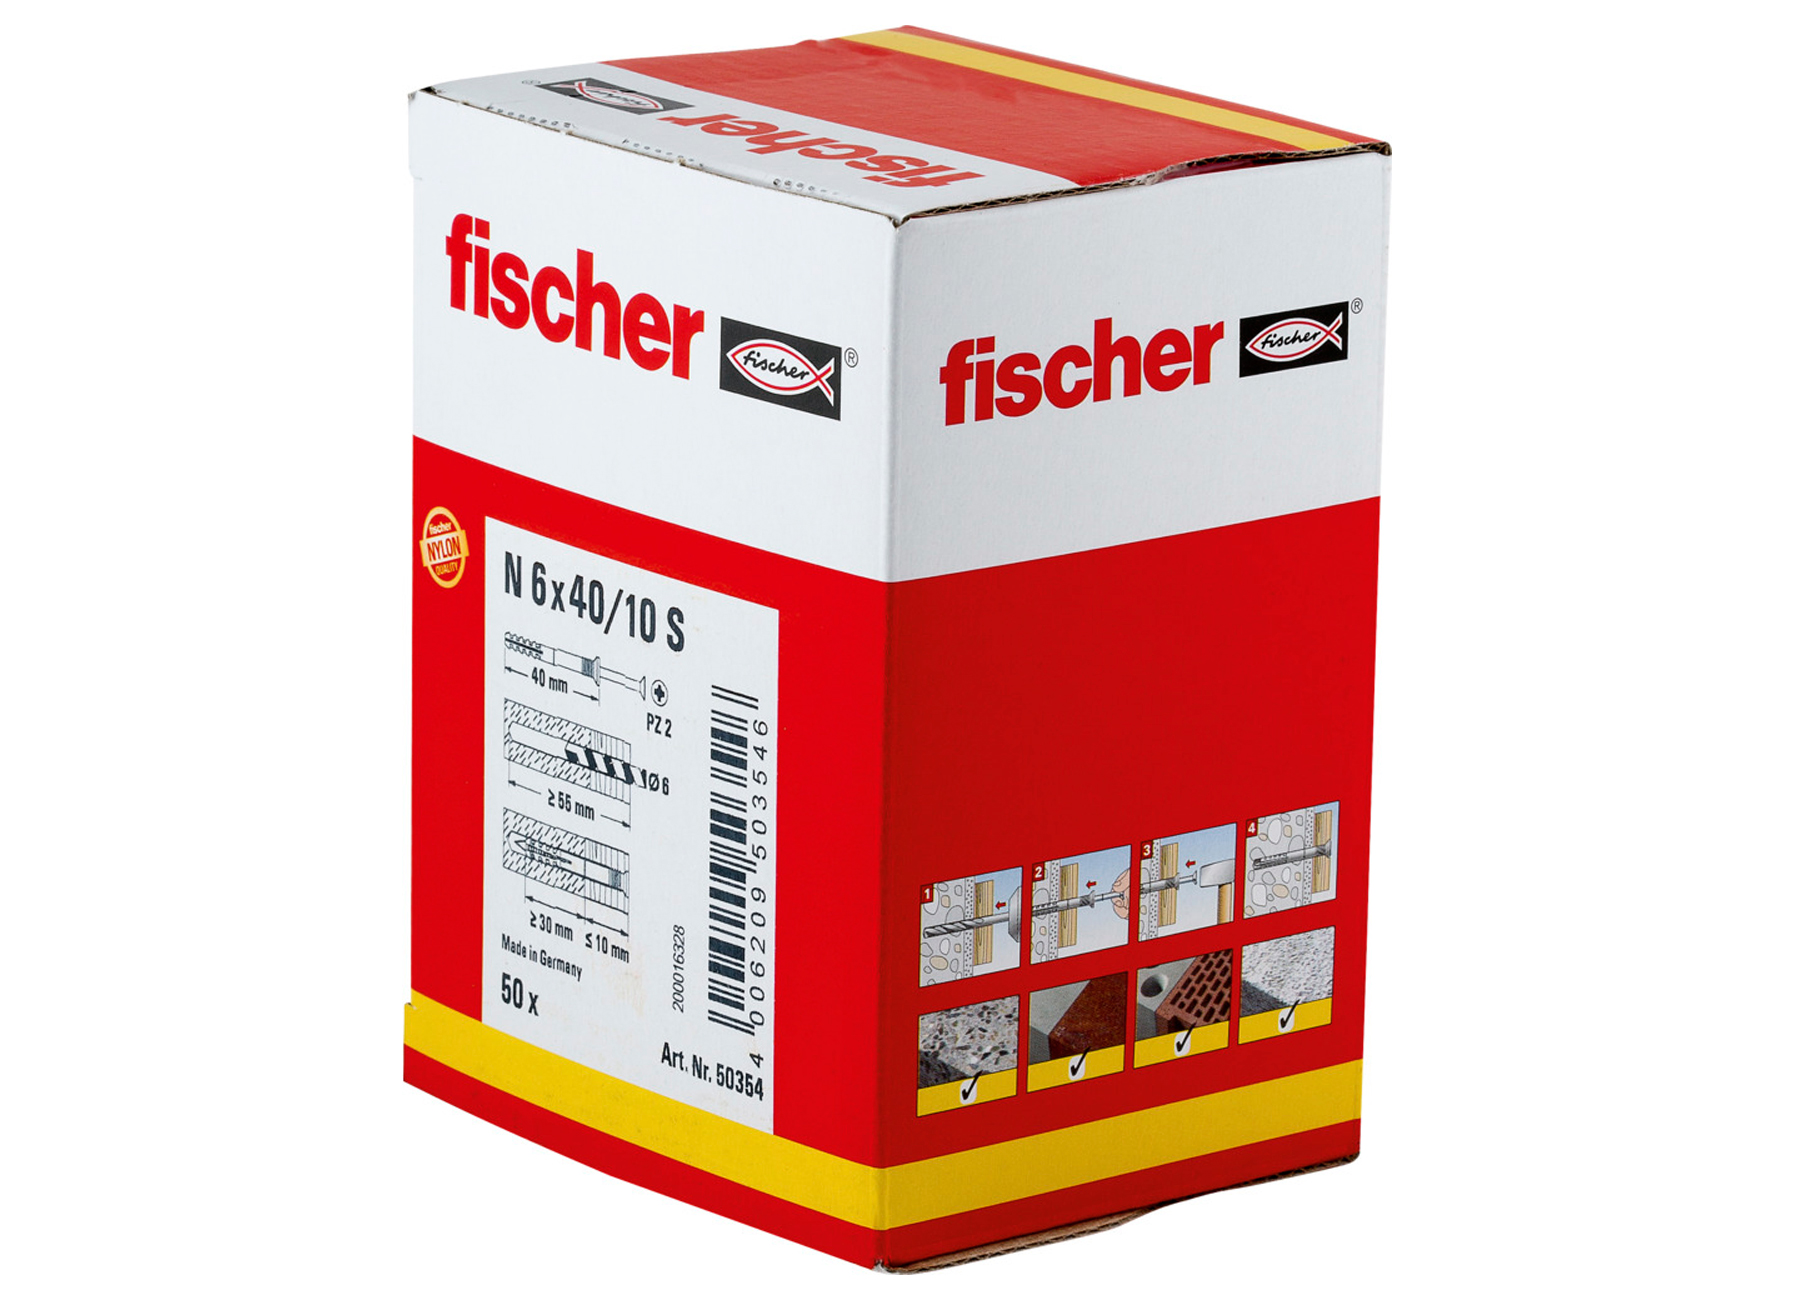 FISCHER SLAGPLUG N 6X40/10 S (50)